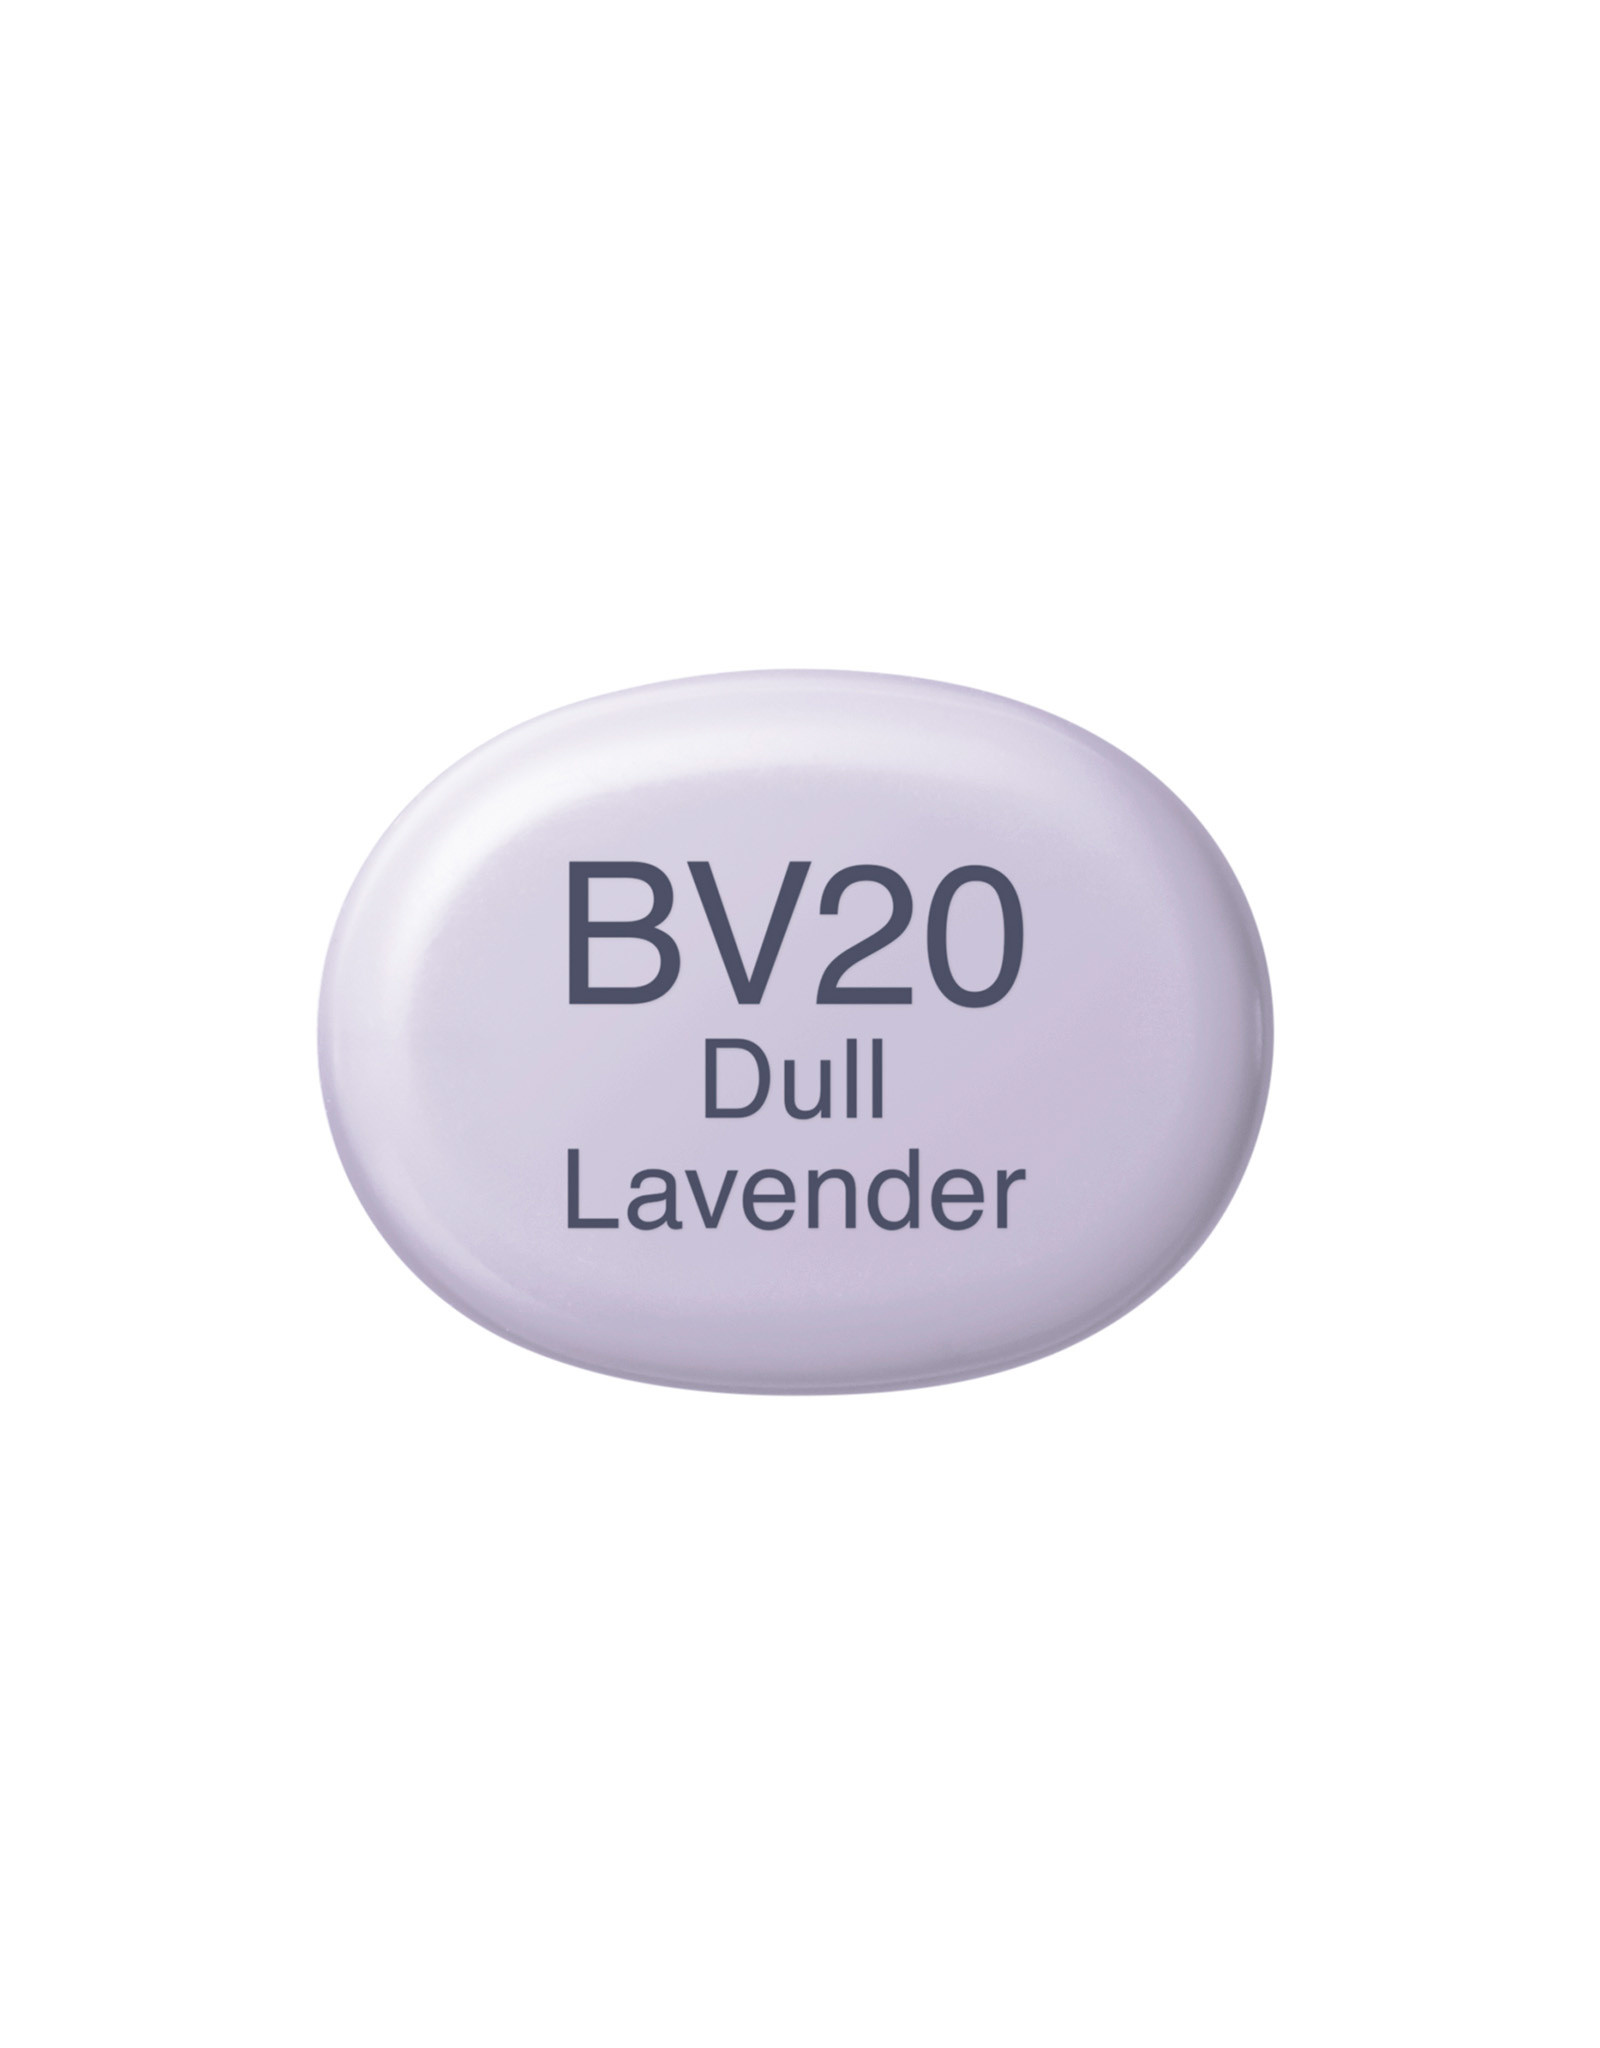 COPIC COPIC Sketch Marker BV20 Dull Lavender